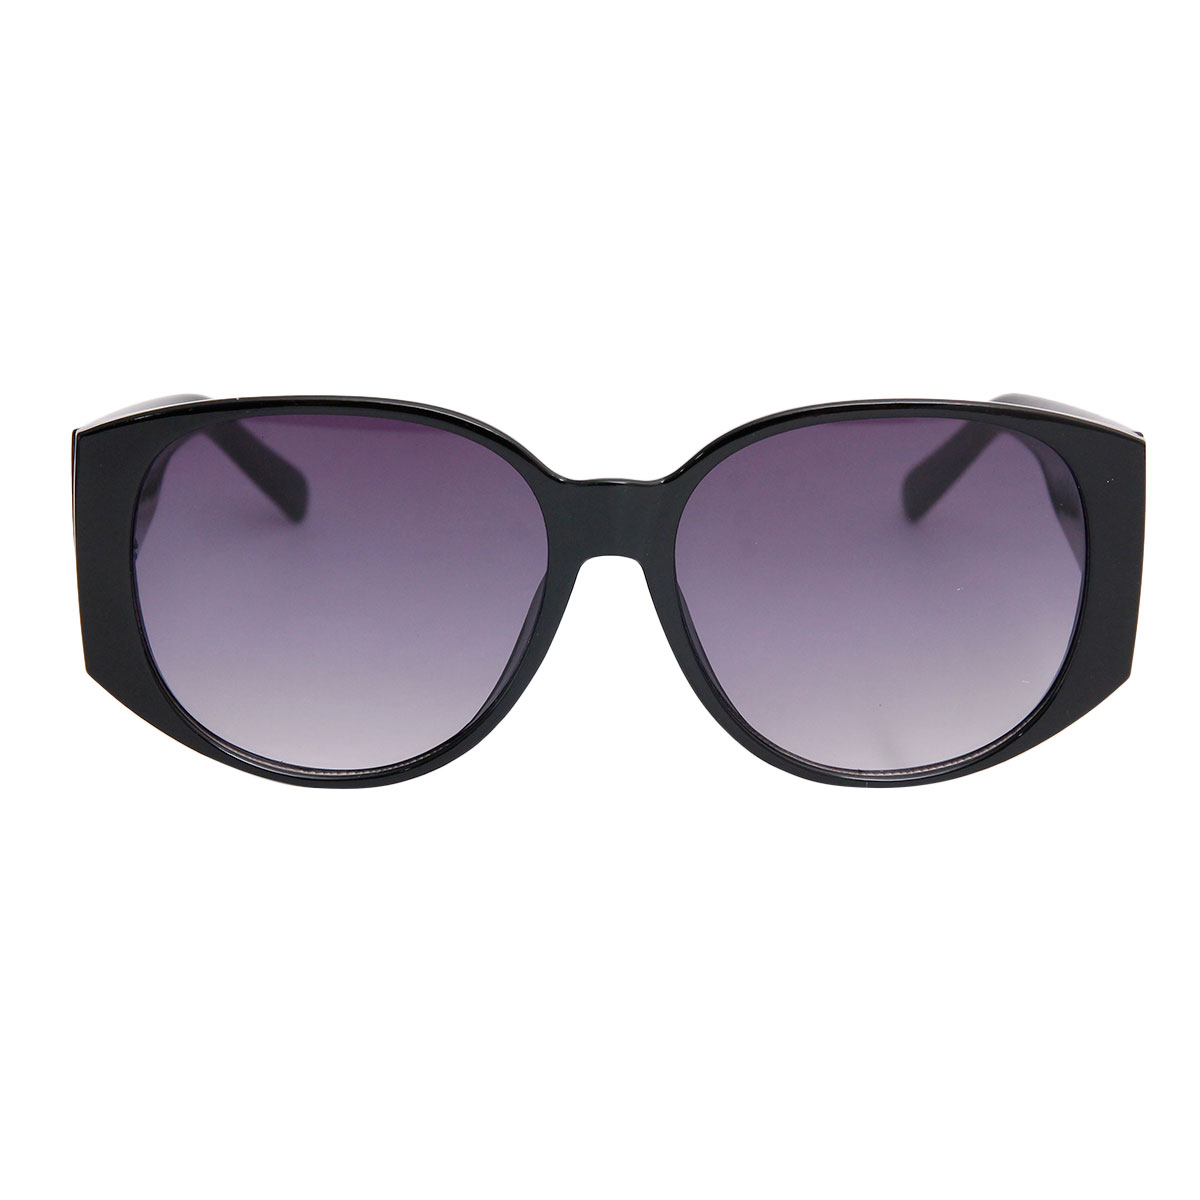 Ferragamo Style Black Rounded Wide Arm Sunglasses